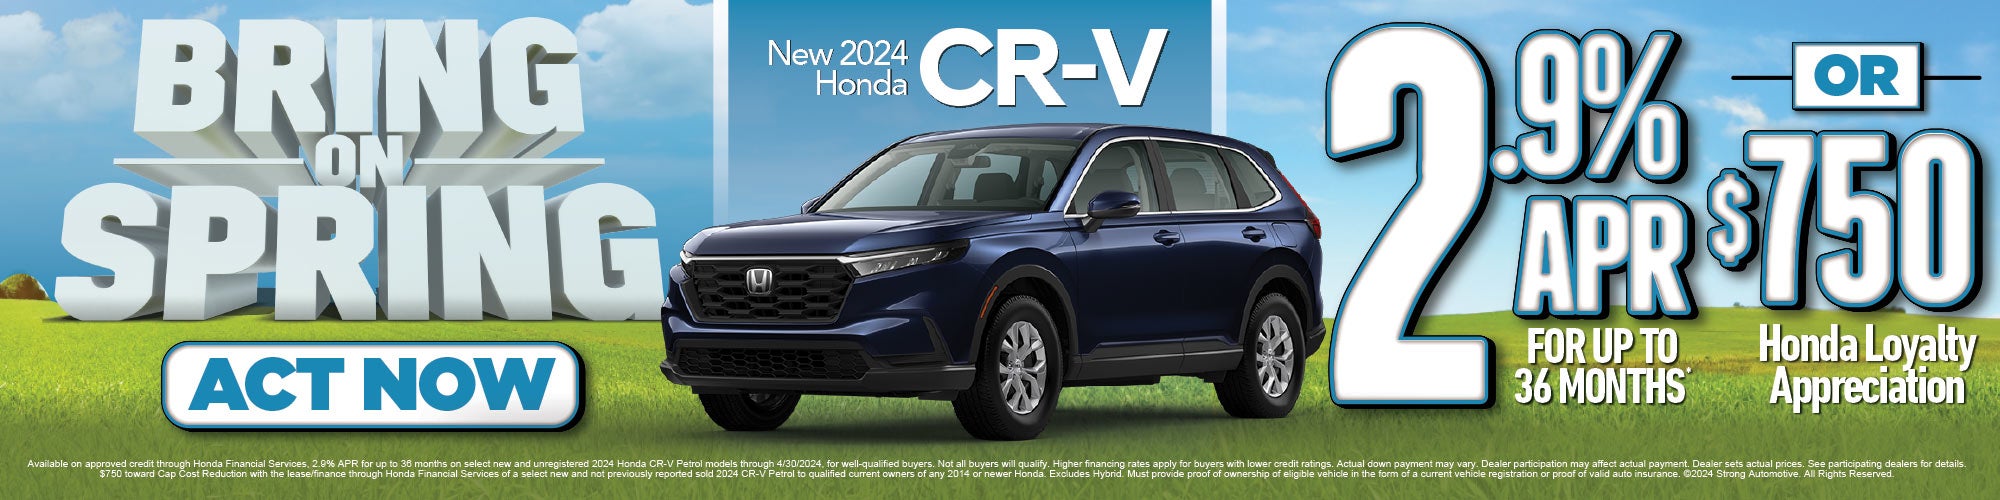 2024 Honda CR-V 2.9% APR for up to 36 months 